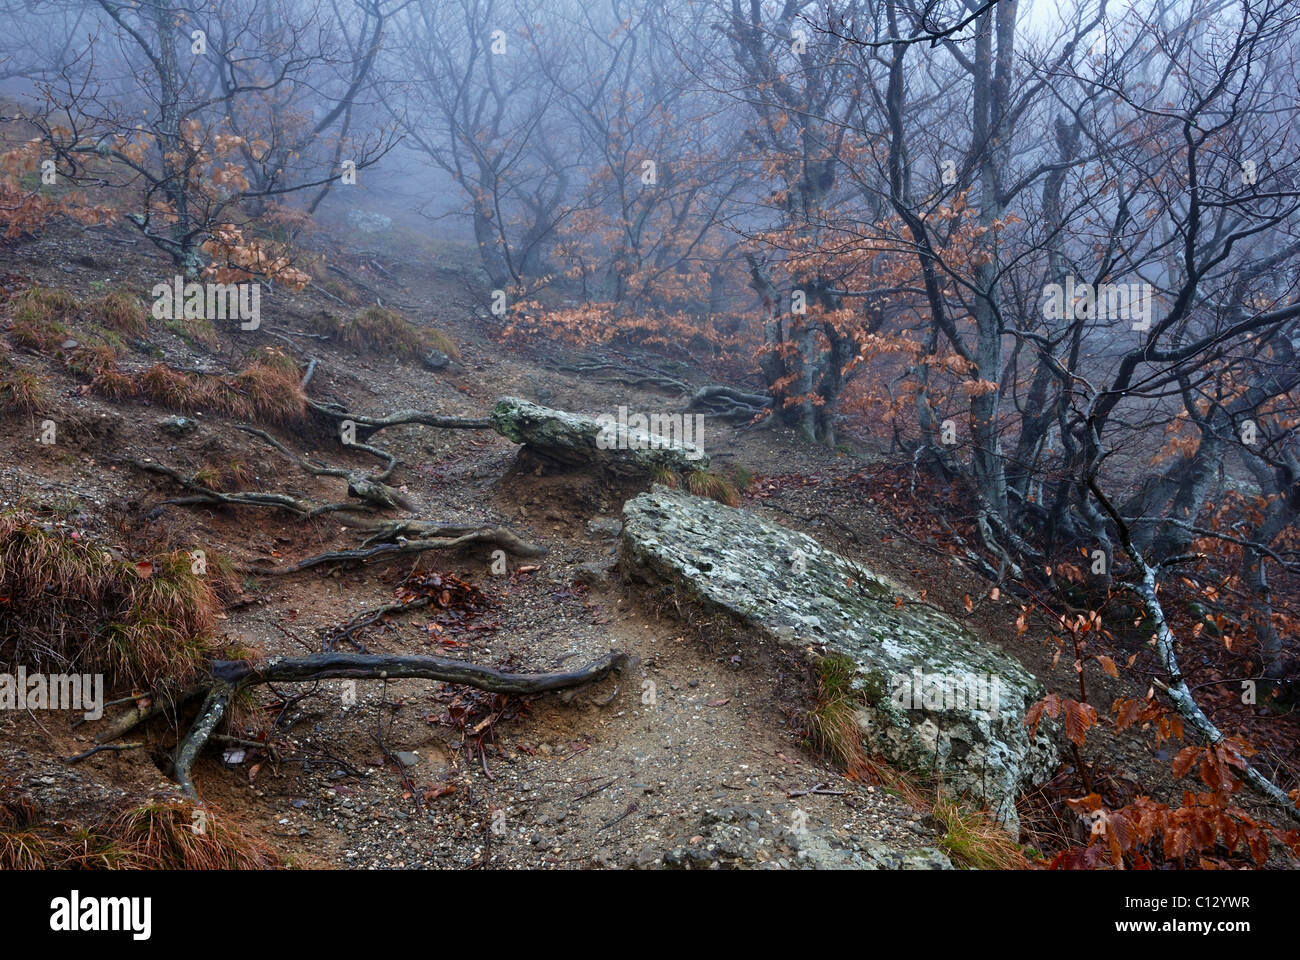 landscape in southern demergi mountain area of crimea Stock Photo